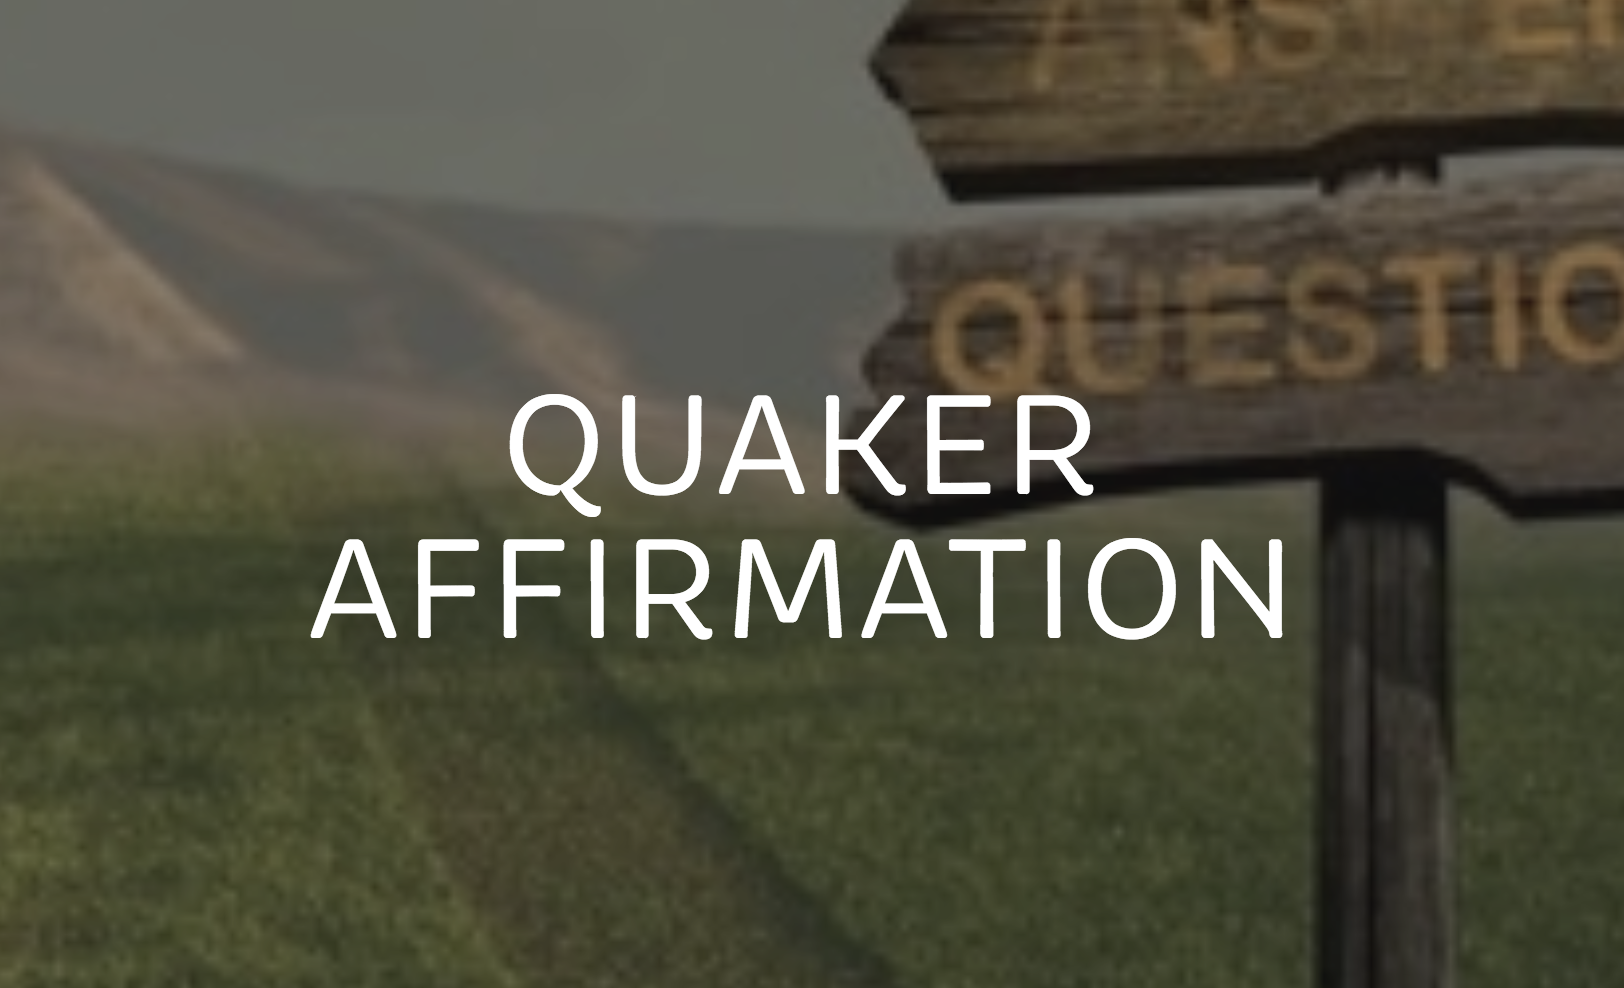 Quaker Affirmation: